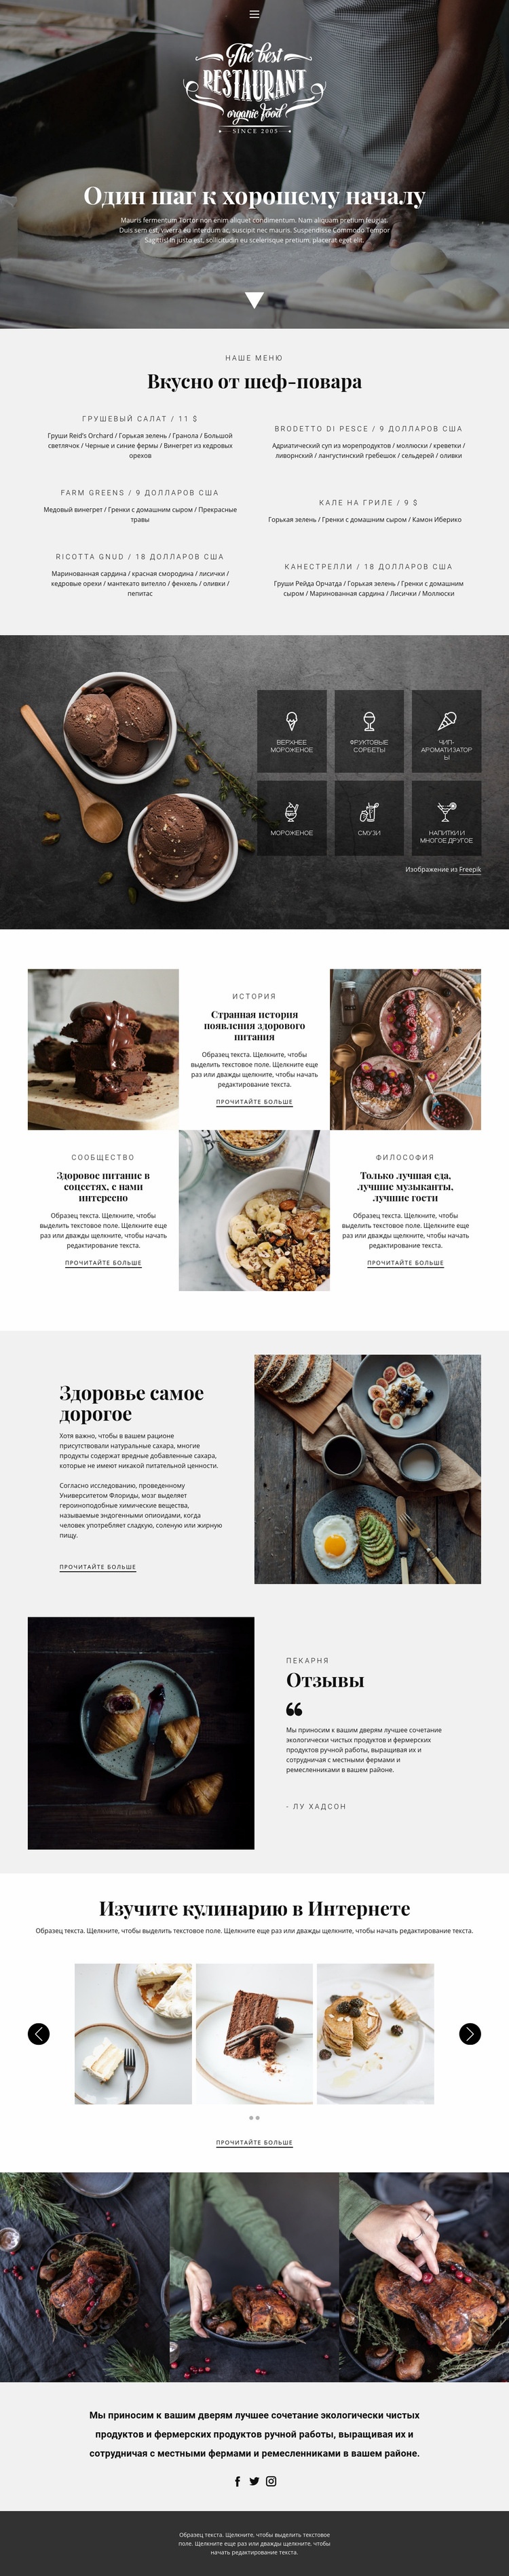 Рецепты и уроки кулинарии Шаблон Joomla